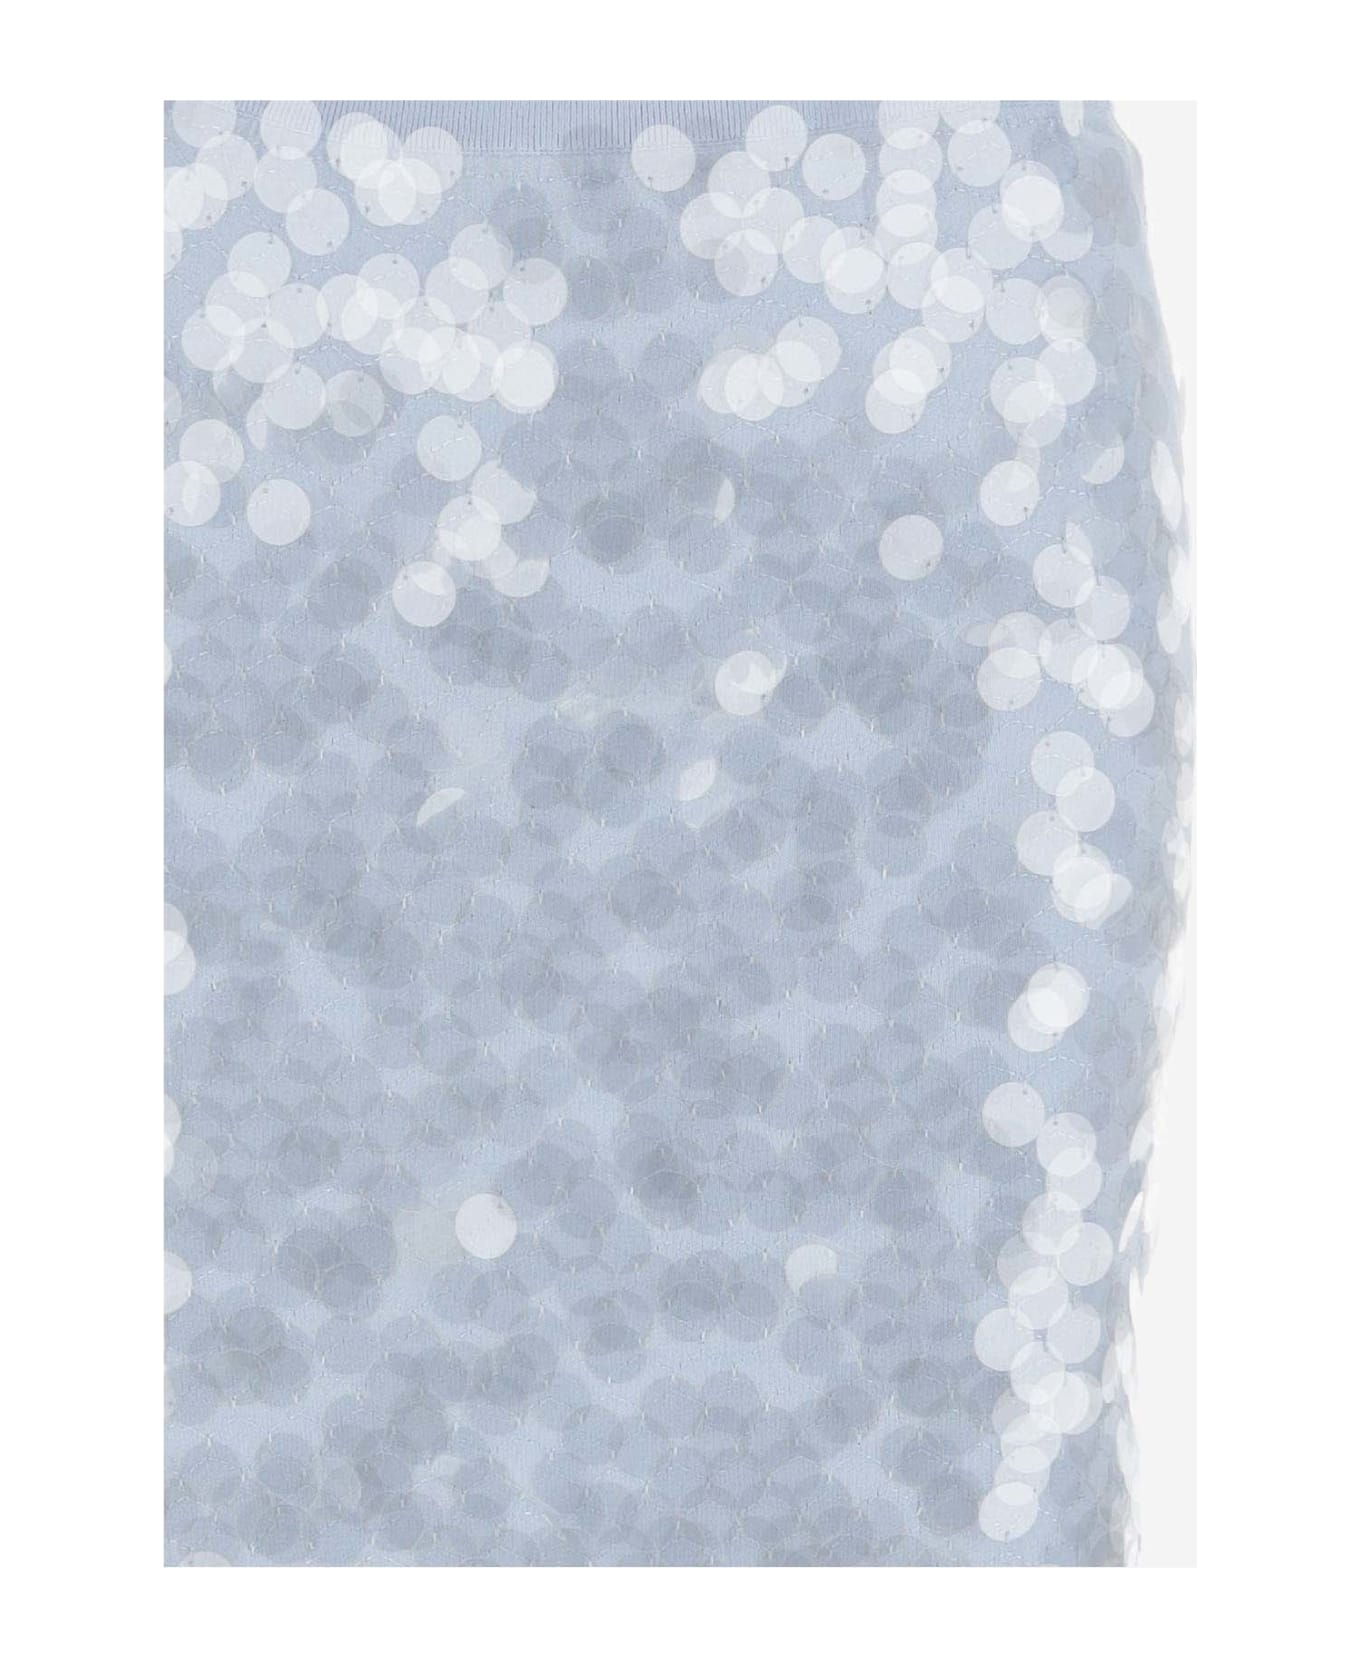 N.21 Sequined Cotton Skirt - Light Blue スカート